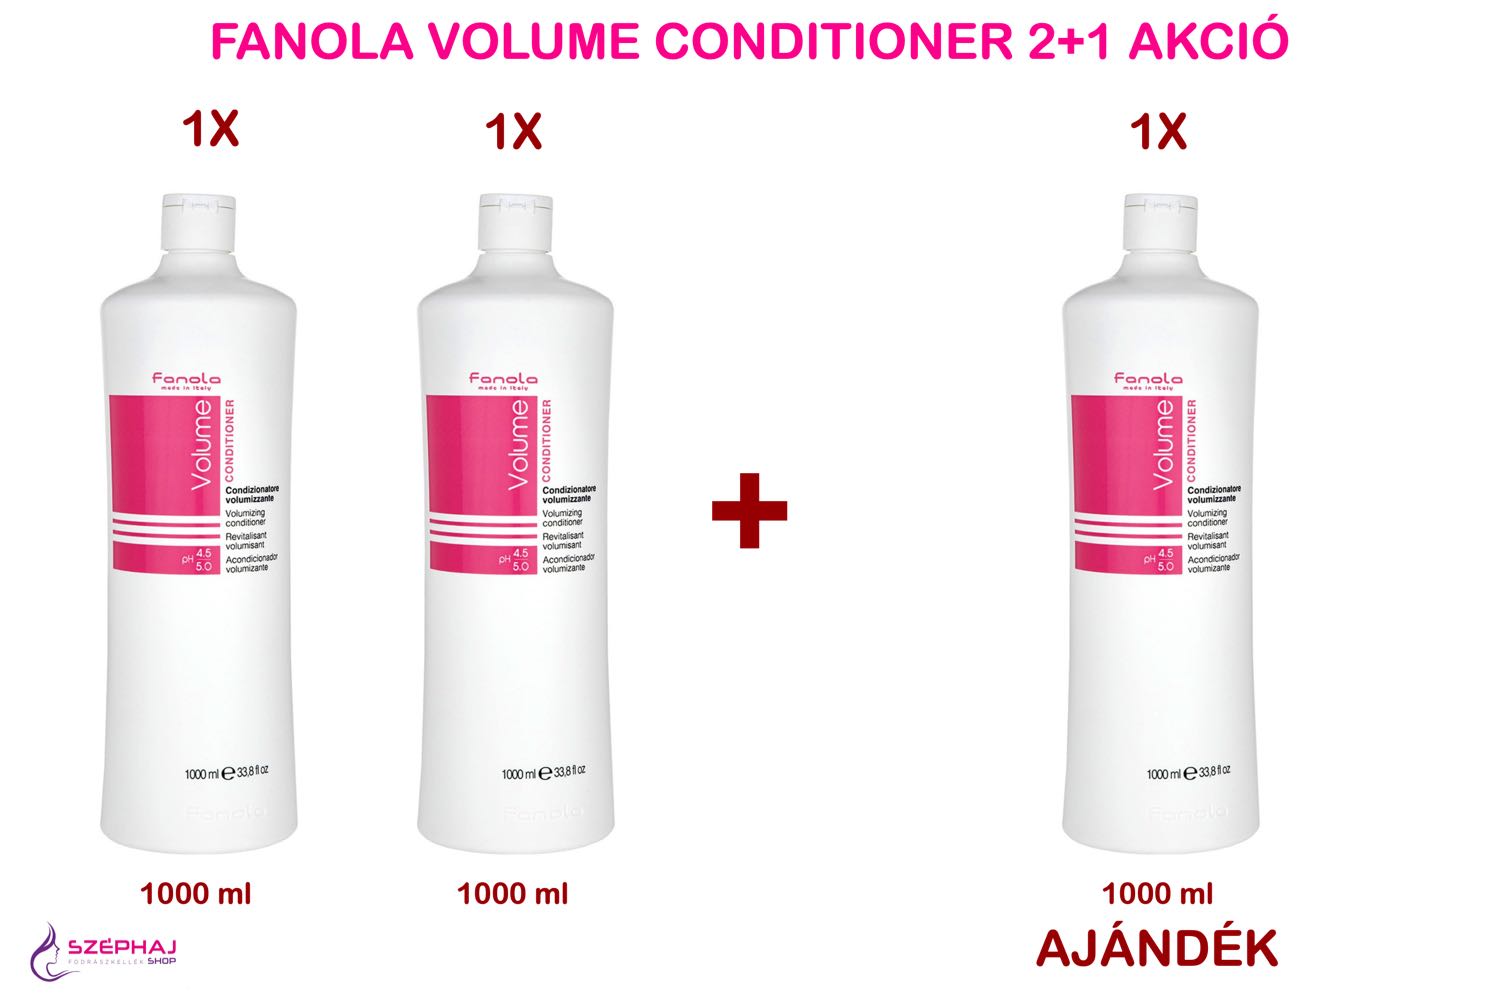 FANOLA Volume Conditioner 1000 ml 2+1 AKCIÓ